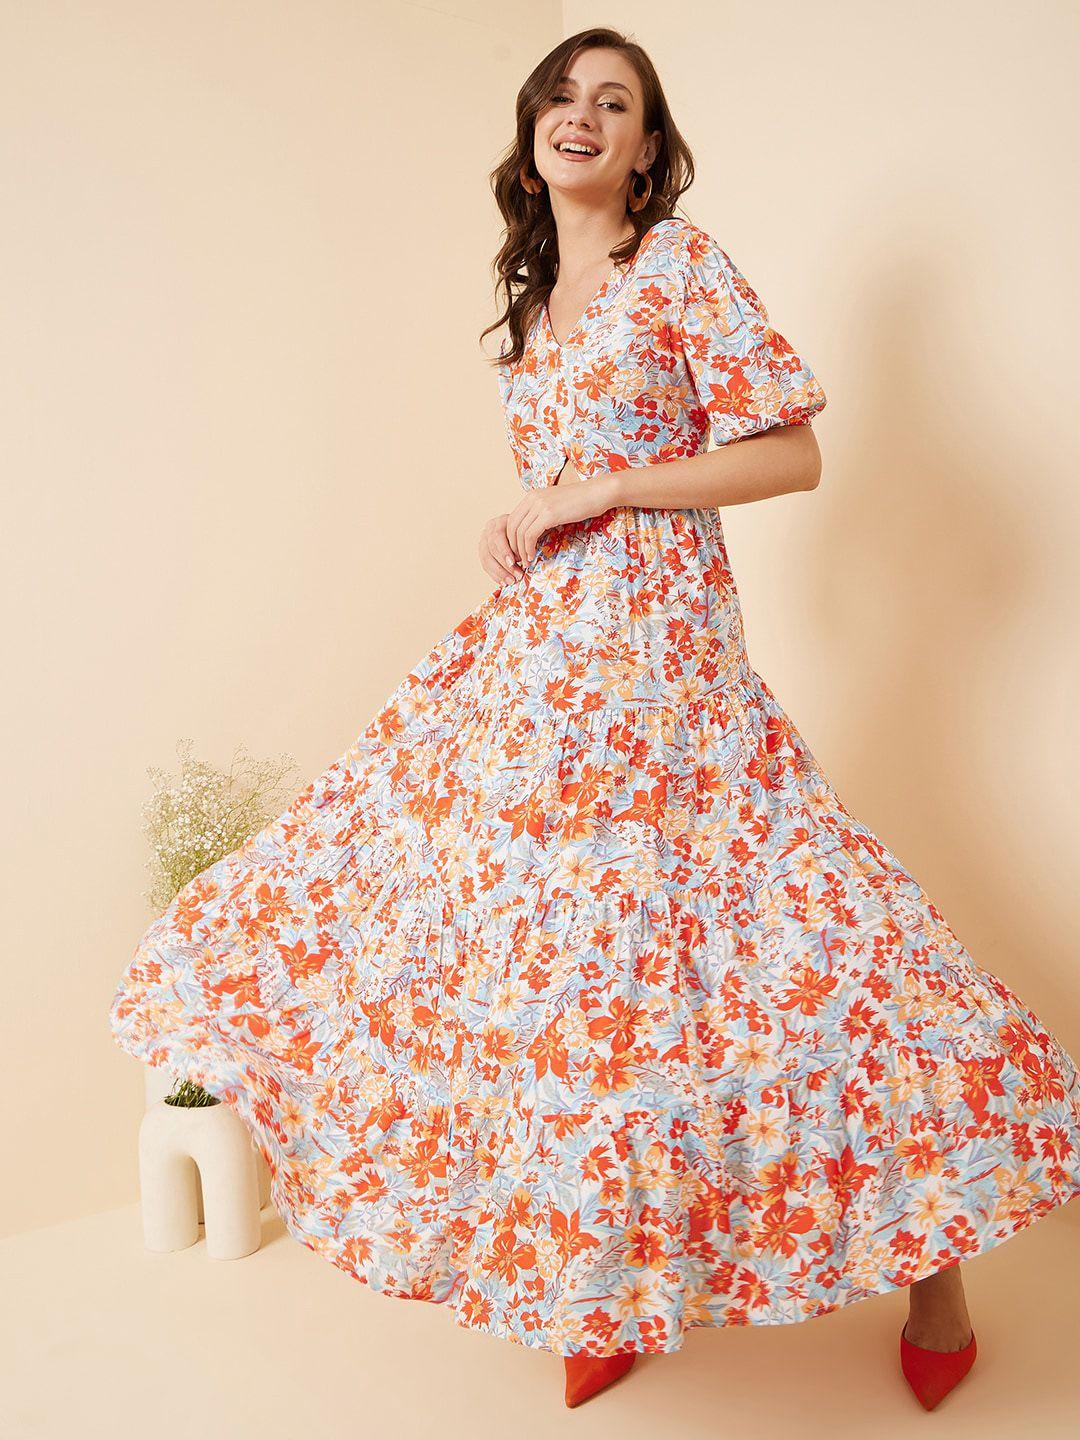 marie-claire-orange-floral-printed-maxi-dress